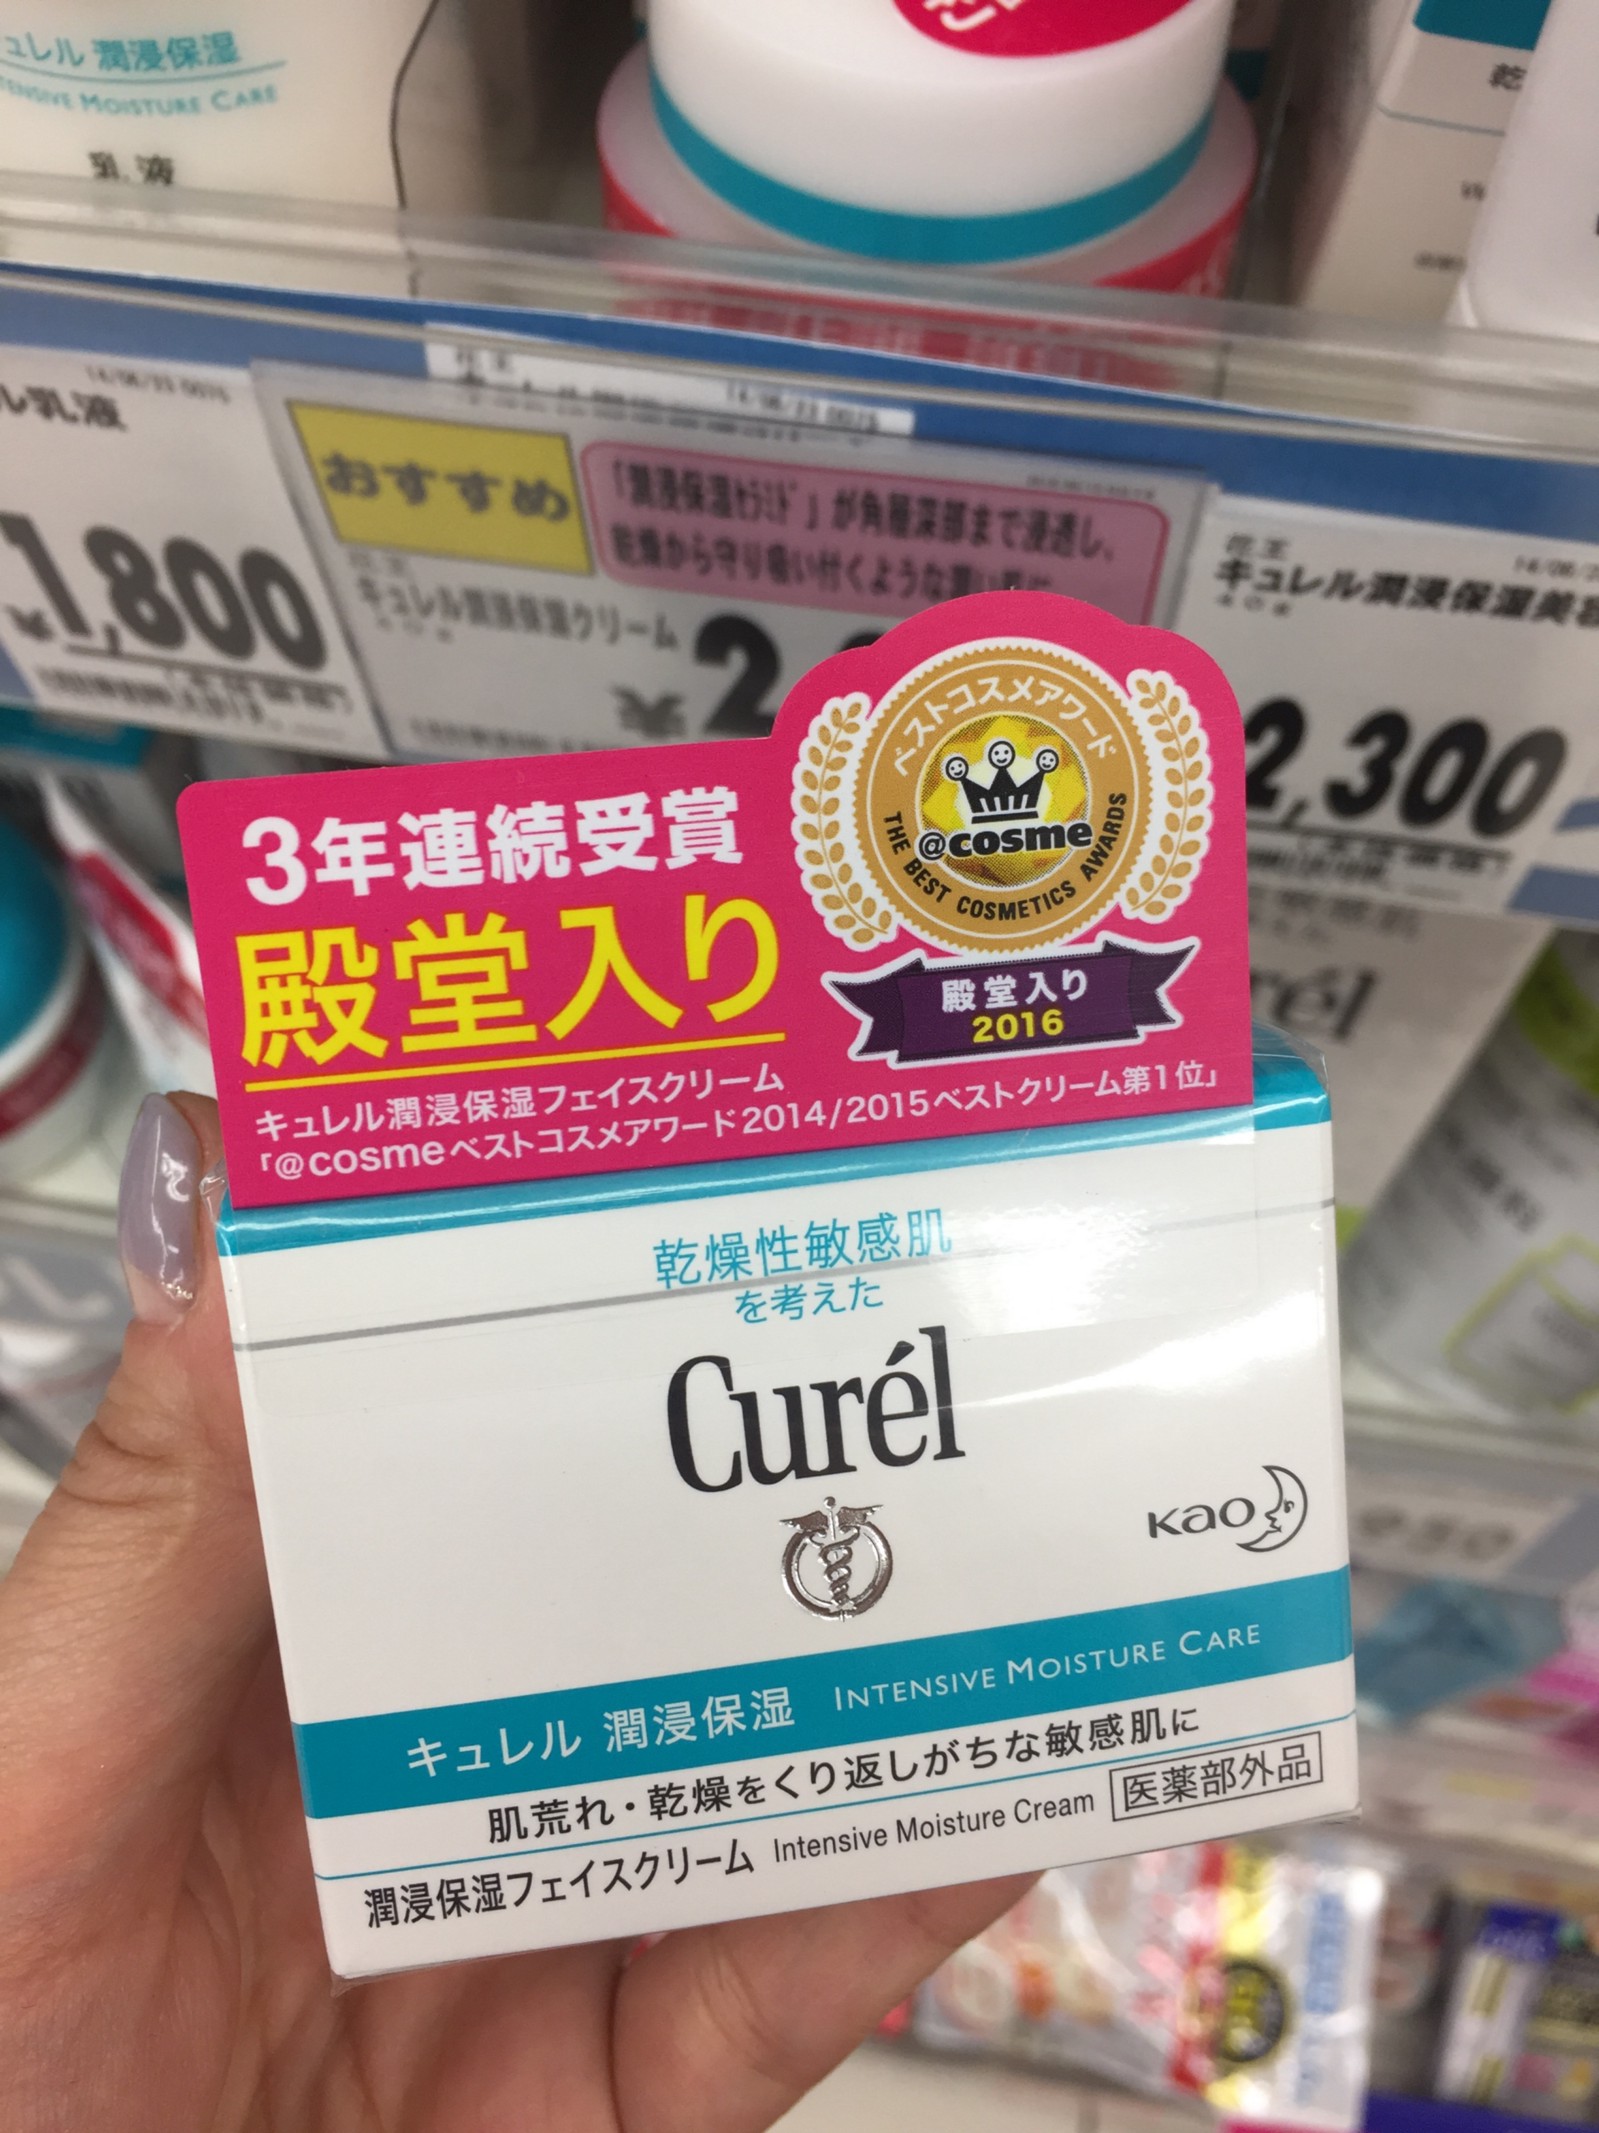 Best Japanese Skincare Product: KAO Curel Intensive Moisture Cream